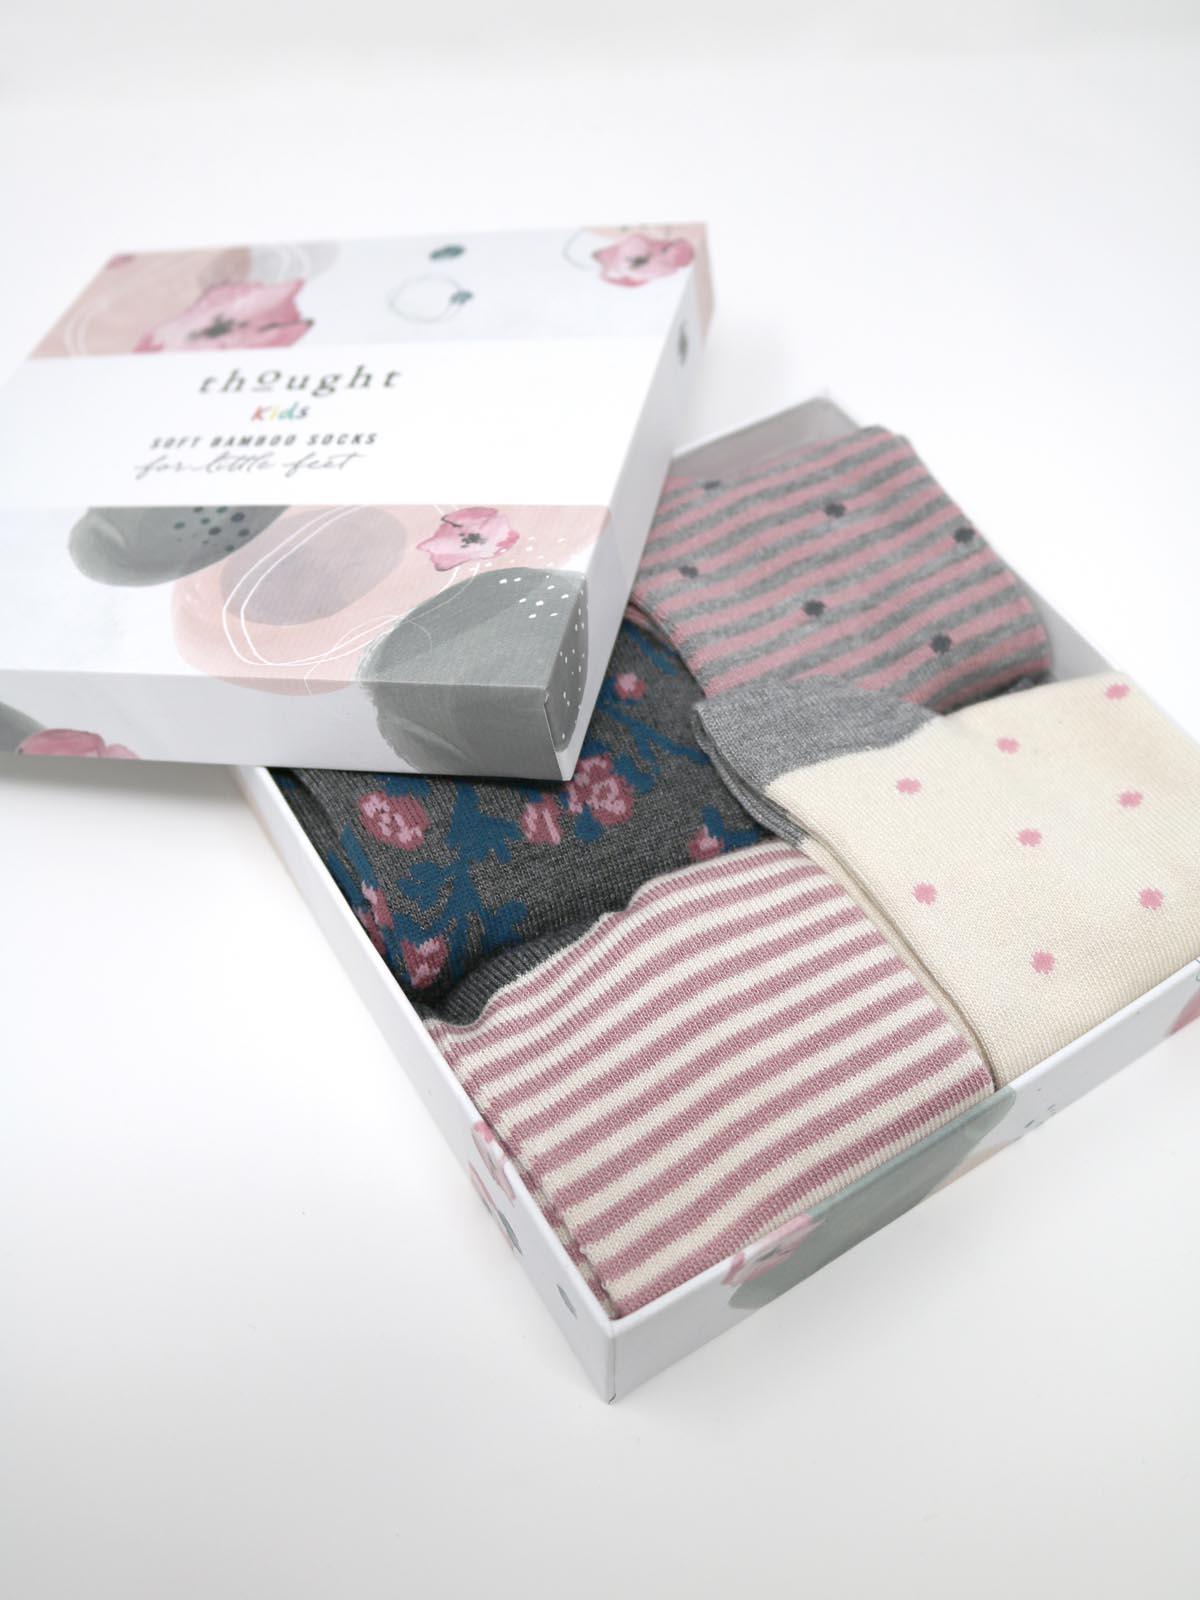 Rose Kids Sock Box - Multi - Thought Clothing UK